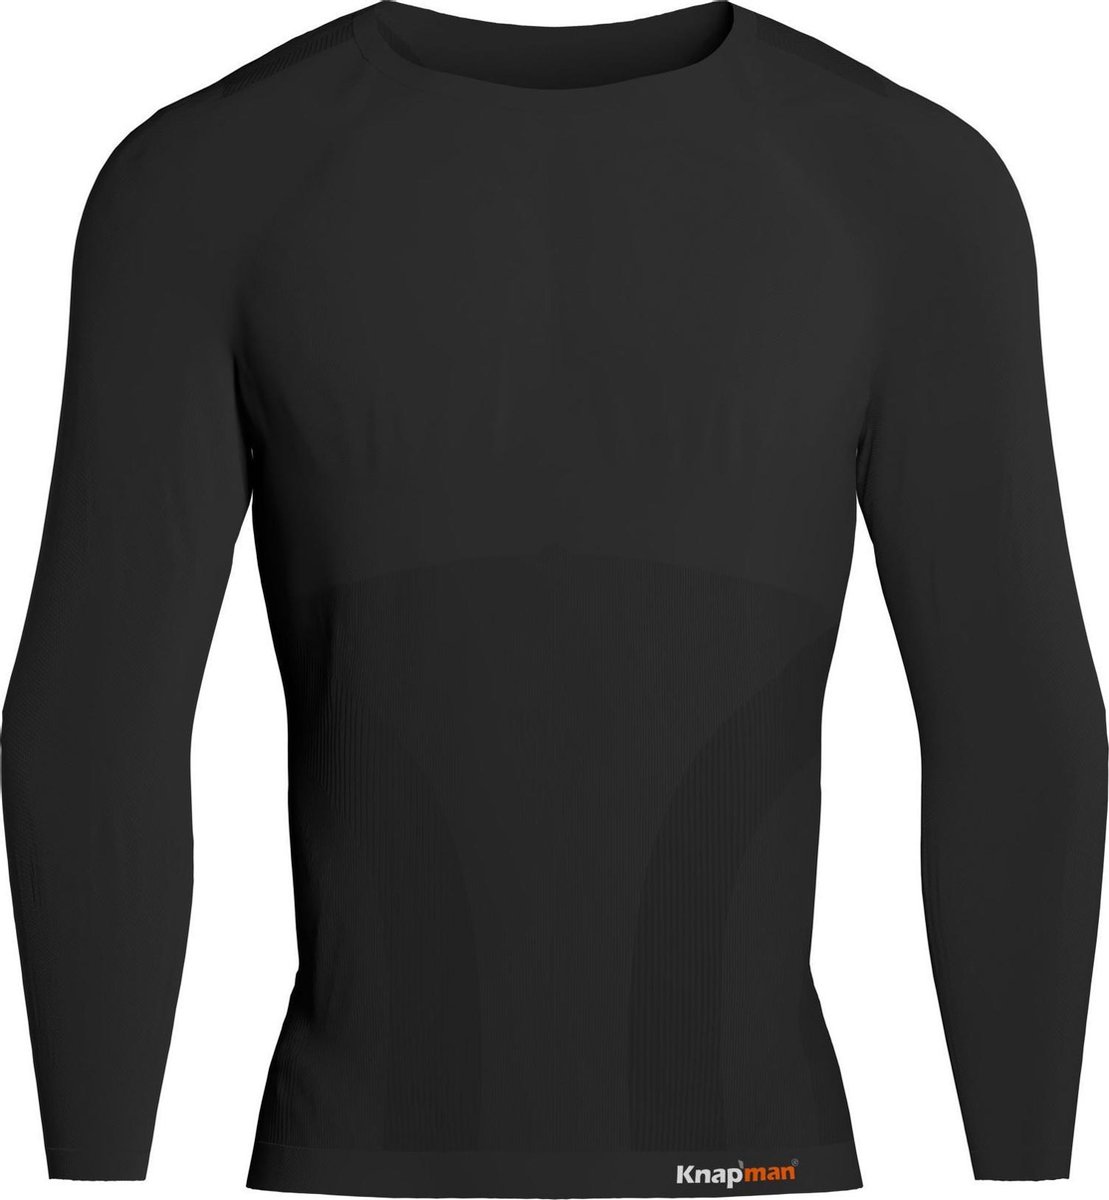 Knap'man Pro Performance Baselayer Thermo Shirt voor Heren | Thermo Compressieshirt | Lange mouwen | Zwart | Maat XL